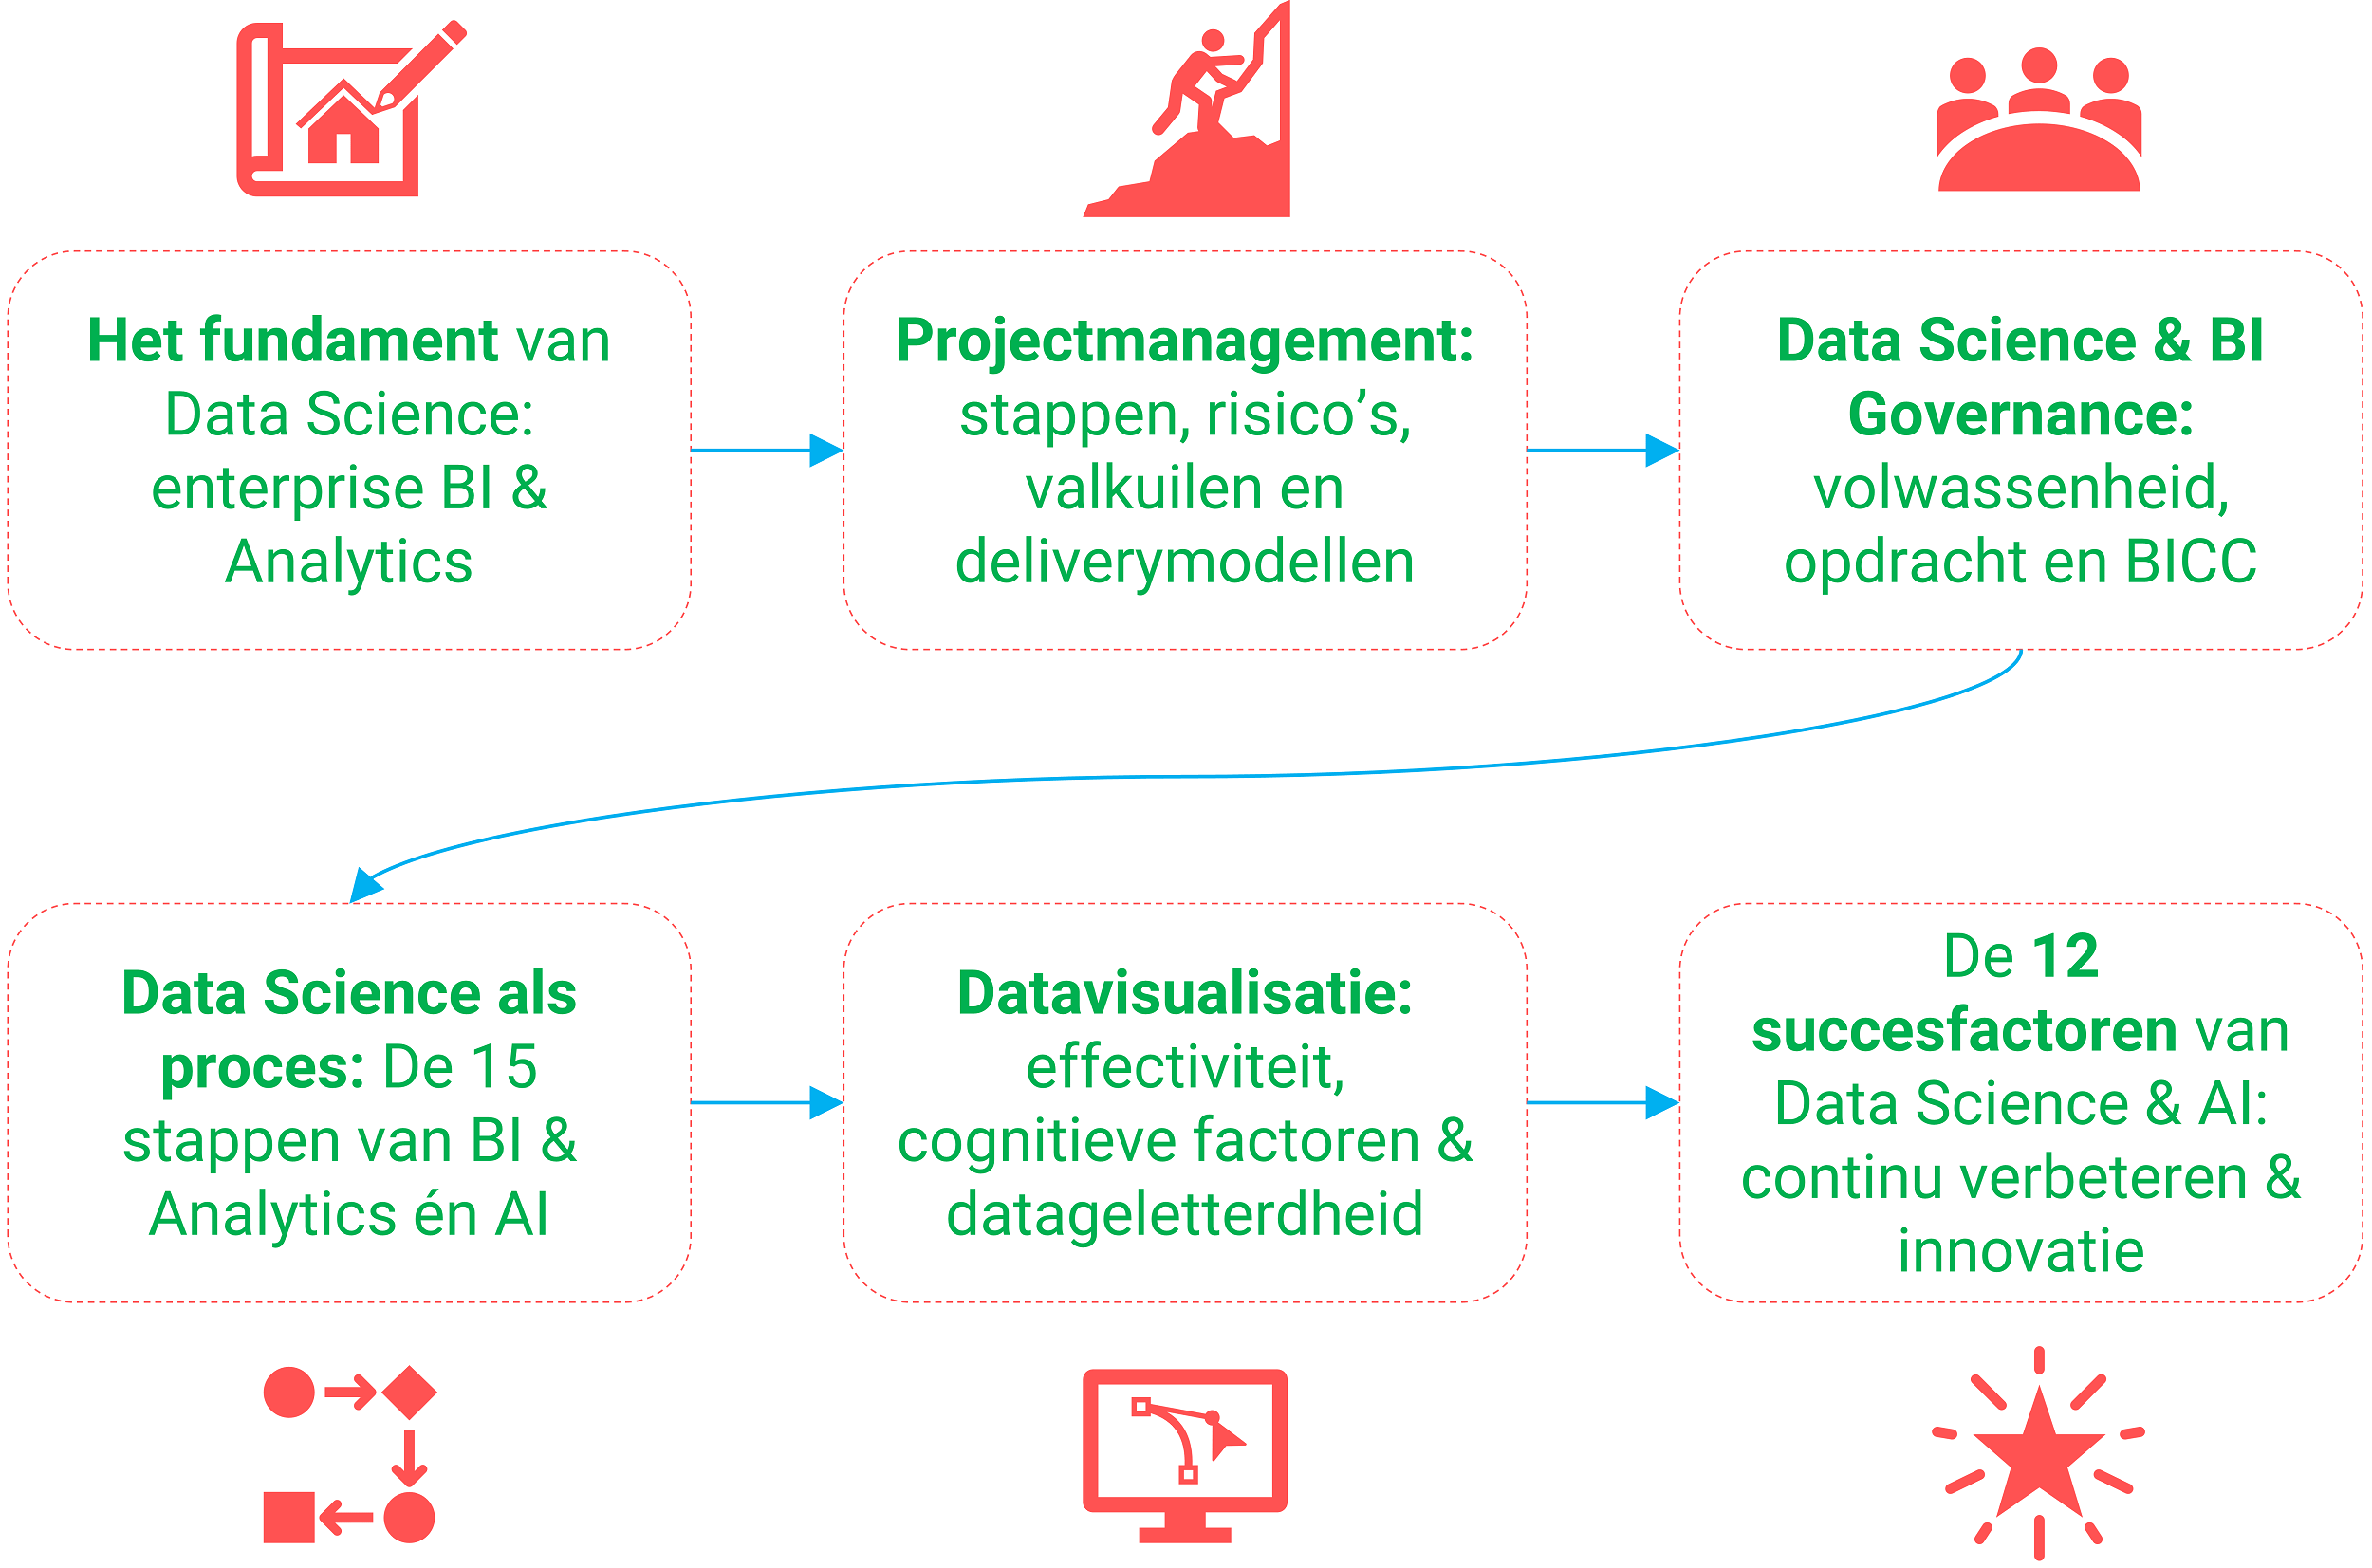 DAG 2: Projectmanagement, datavisualisatie & data science succes